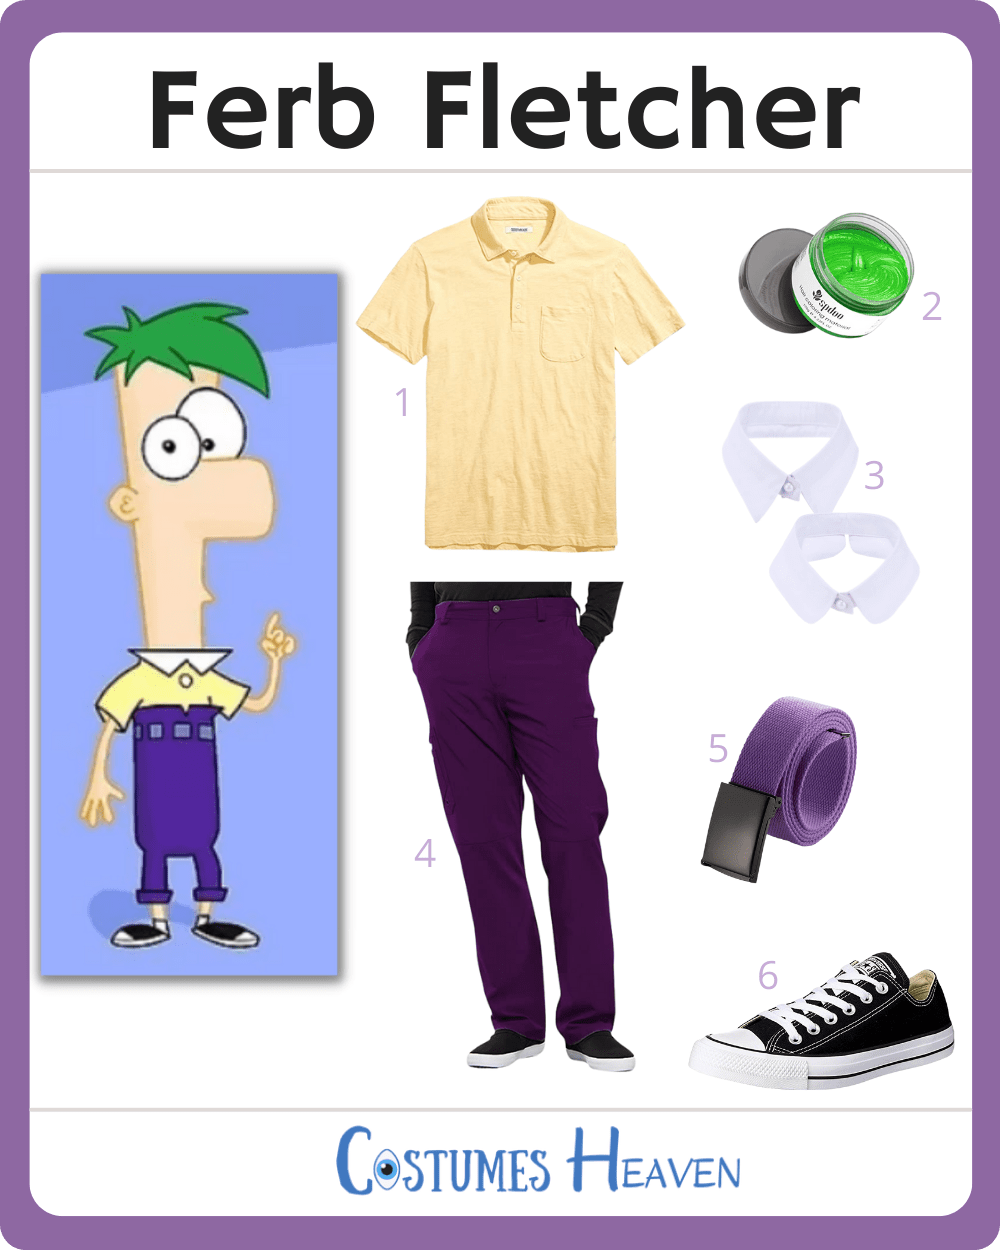 Ferb Fletcher costume